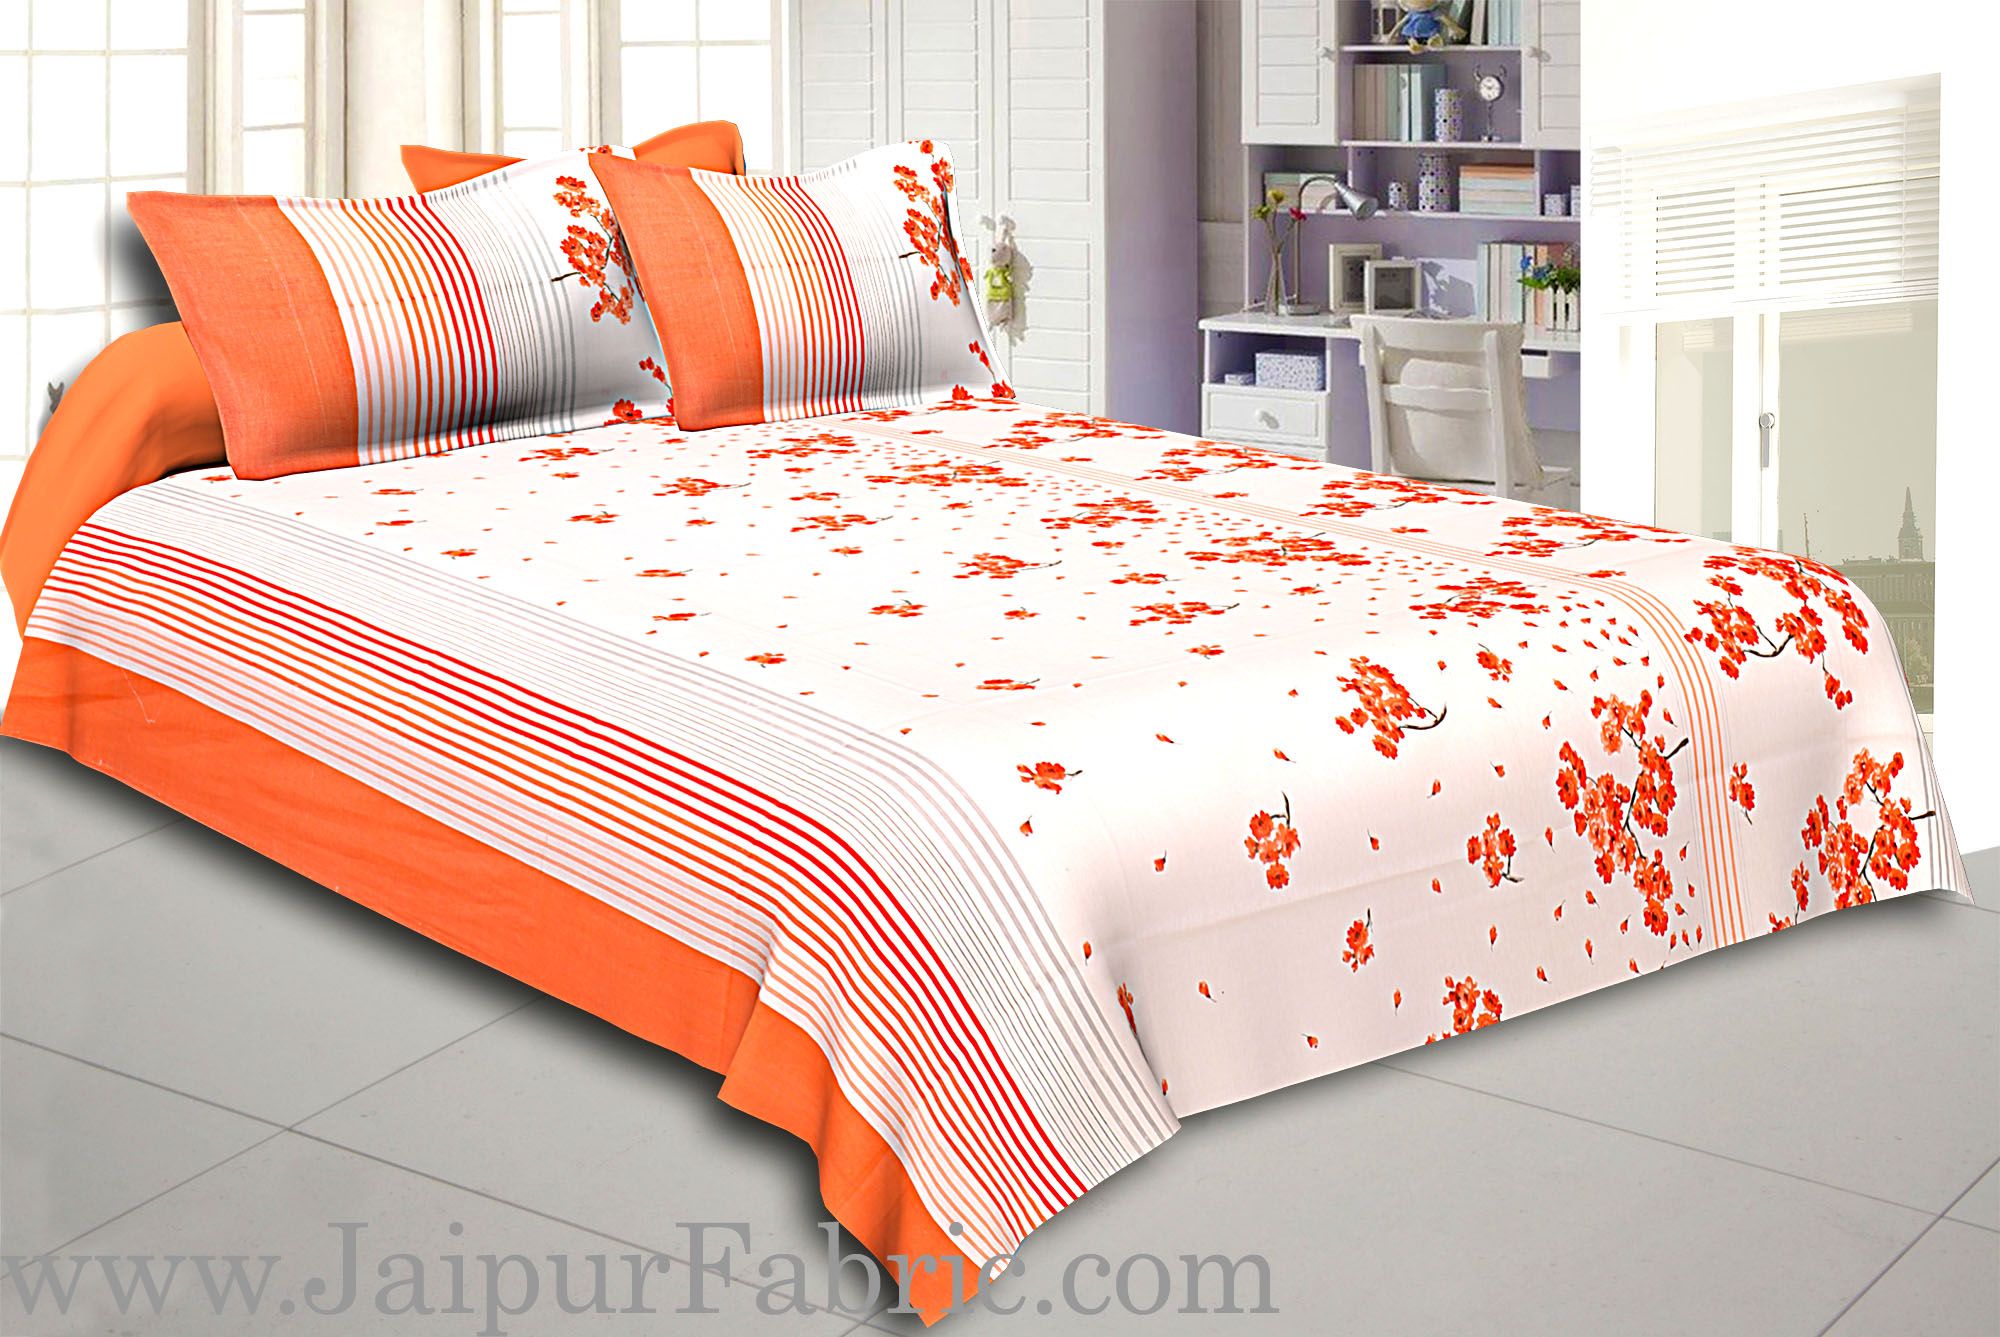 Orange and Black Stripes Floral Print Cotton Double Bed Sheet